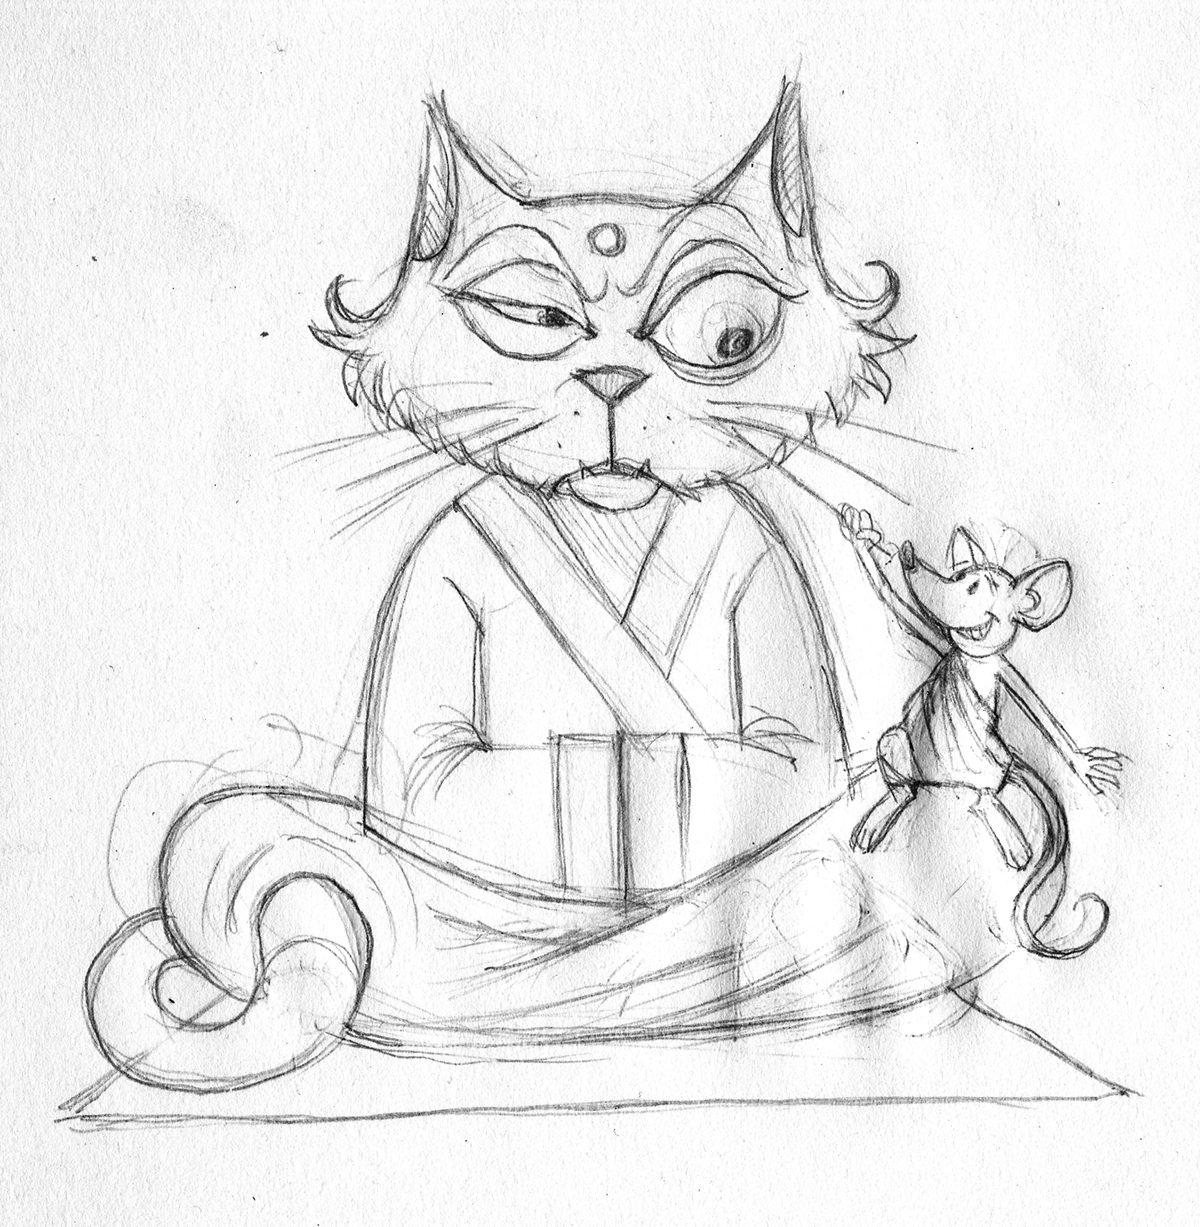 meditation meditate Cat mouse Om meaw